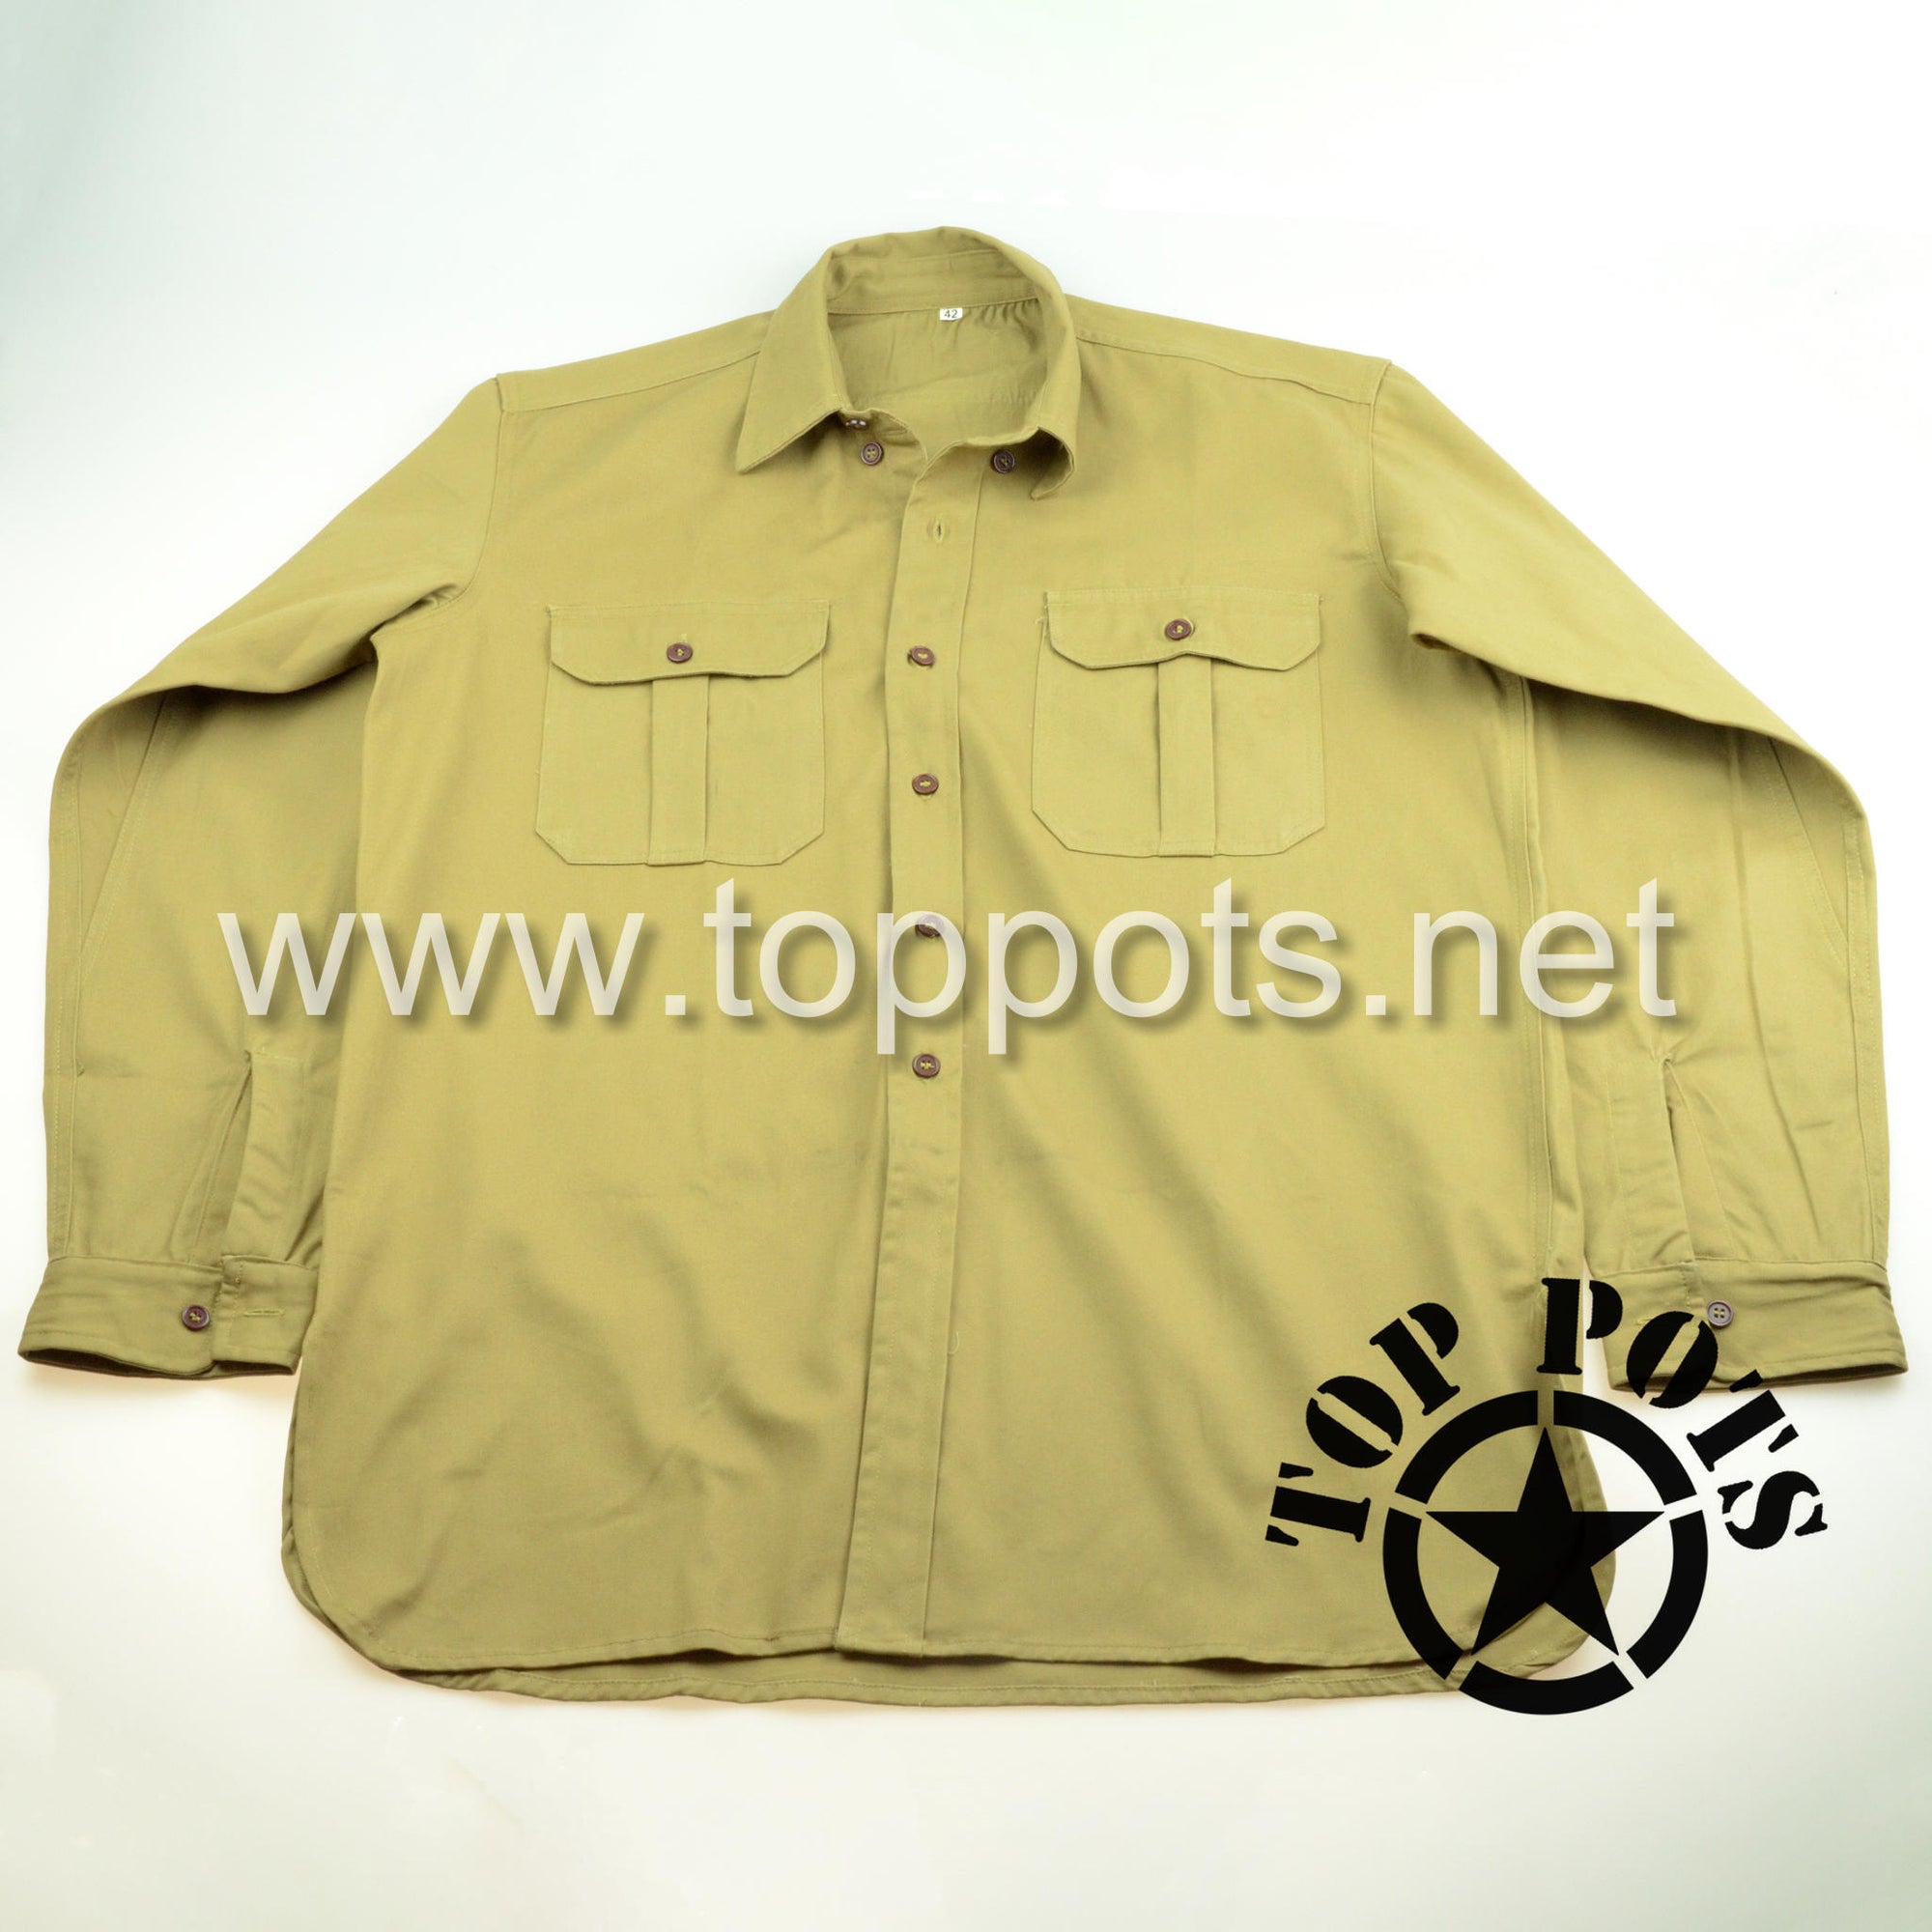 WWII Canadian Army Reproduction Cotton Khaki Uniform Service Shirt – Khaki Drill